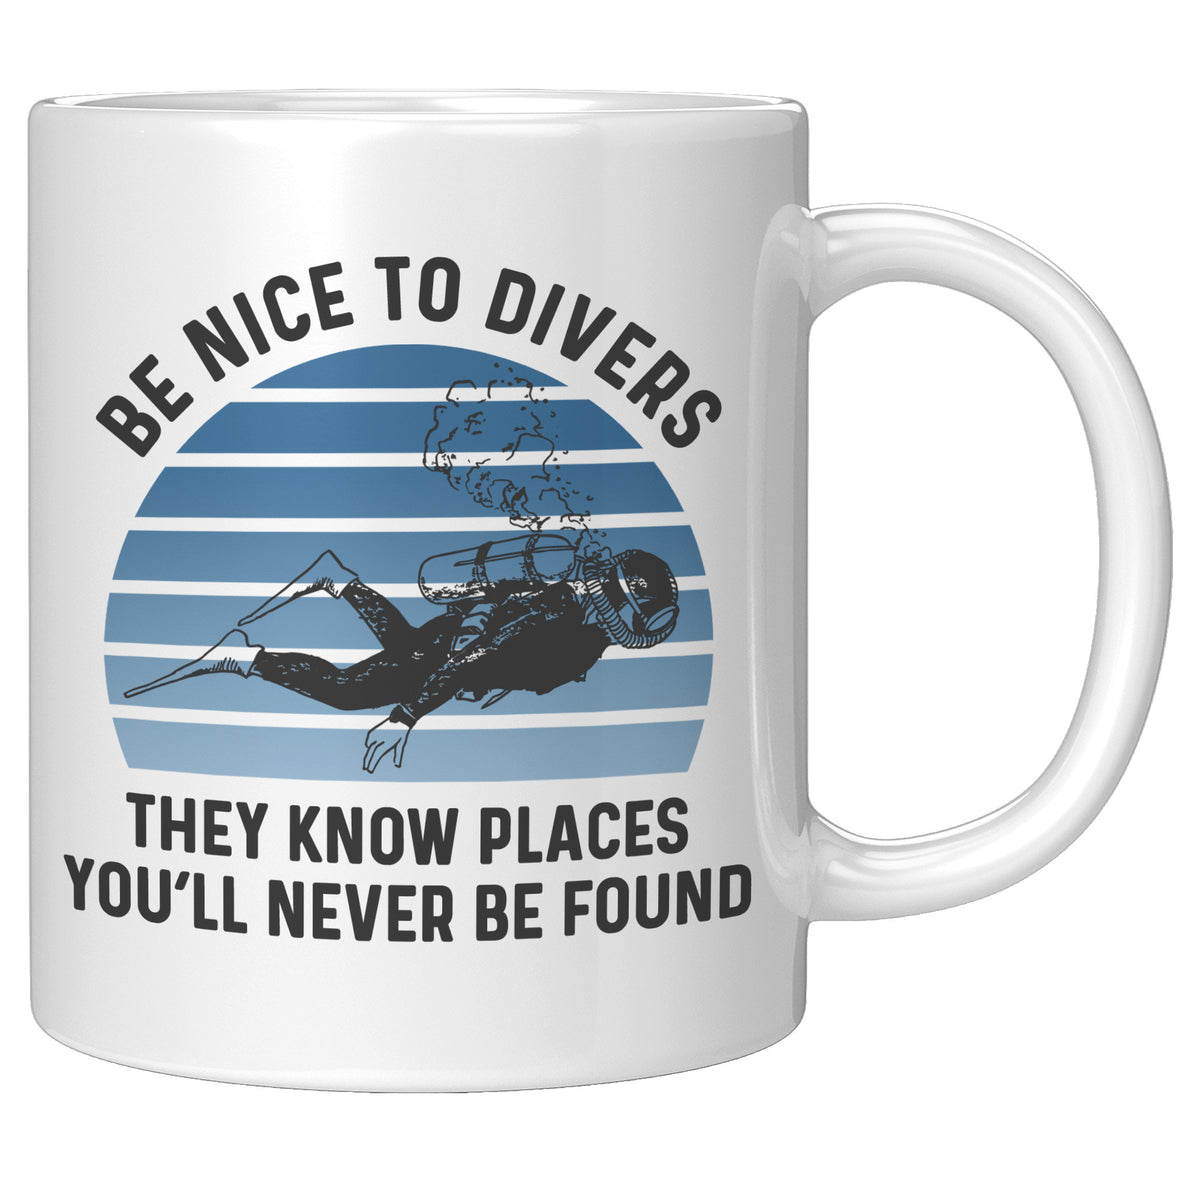 Scuba Diver Mug - Be Nice to Divers